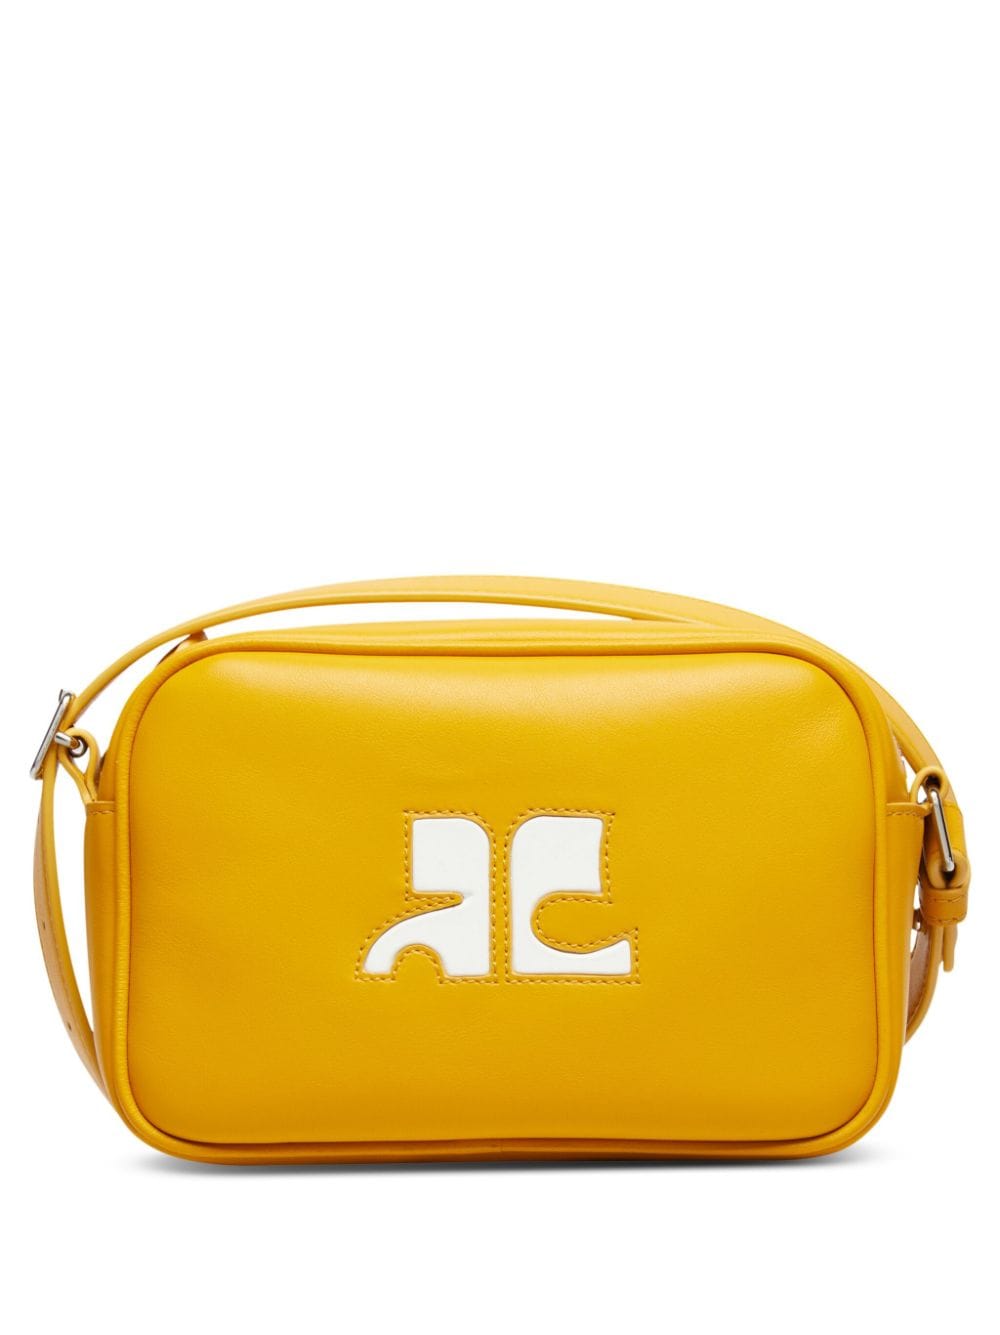 Courrèges Reedition Camera leather bag - Yellow von Courrèges